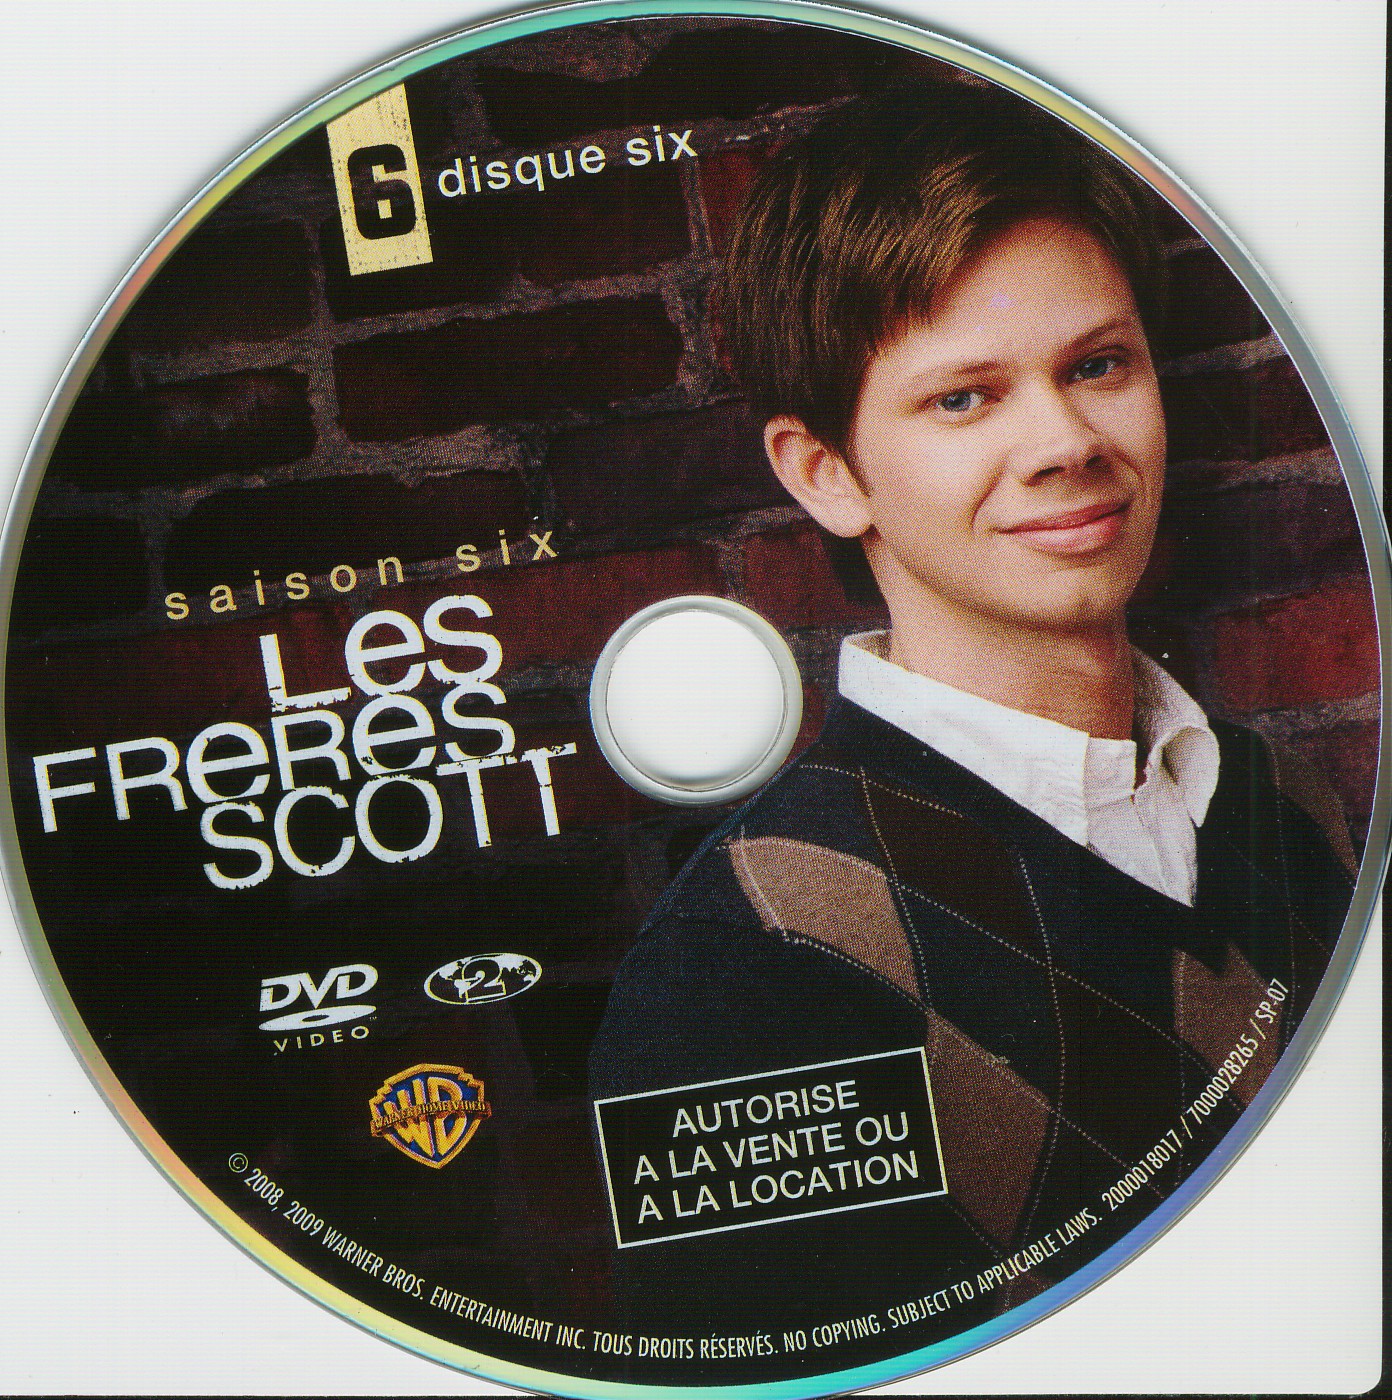 Les freres Scott saison 6 DISC 6